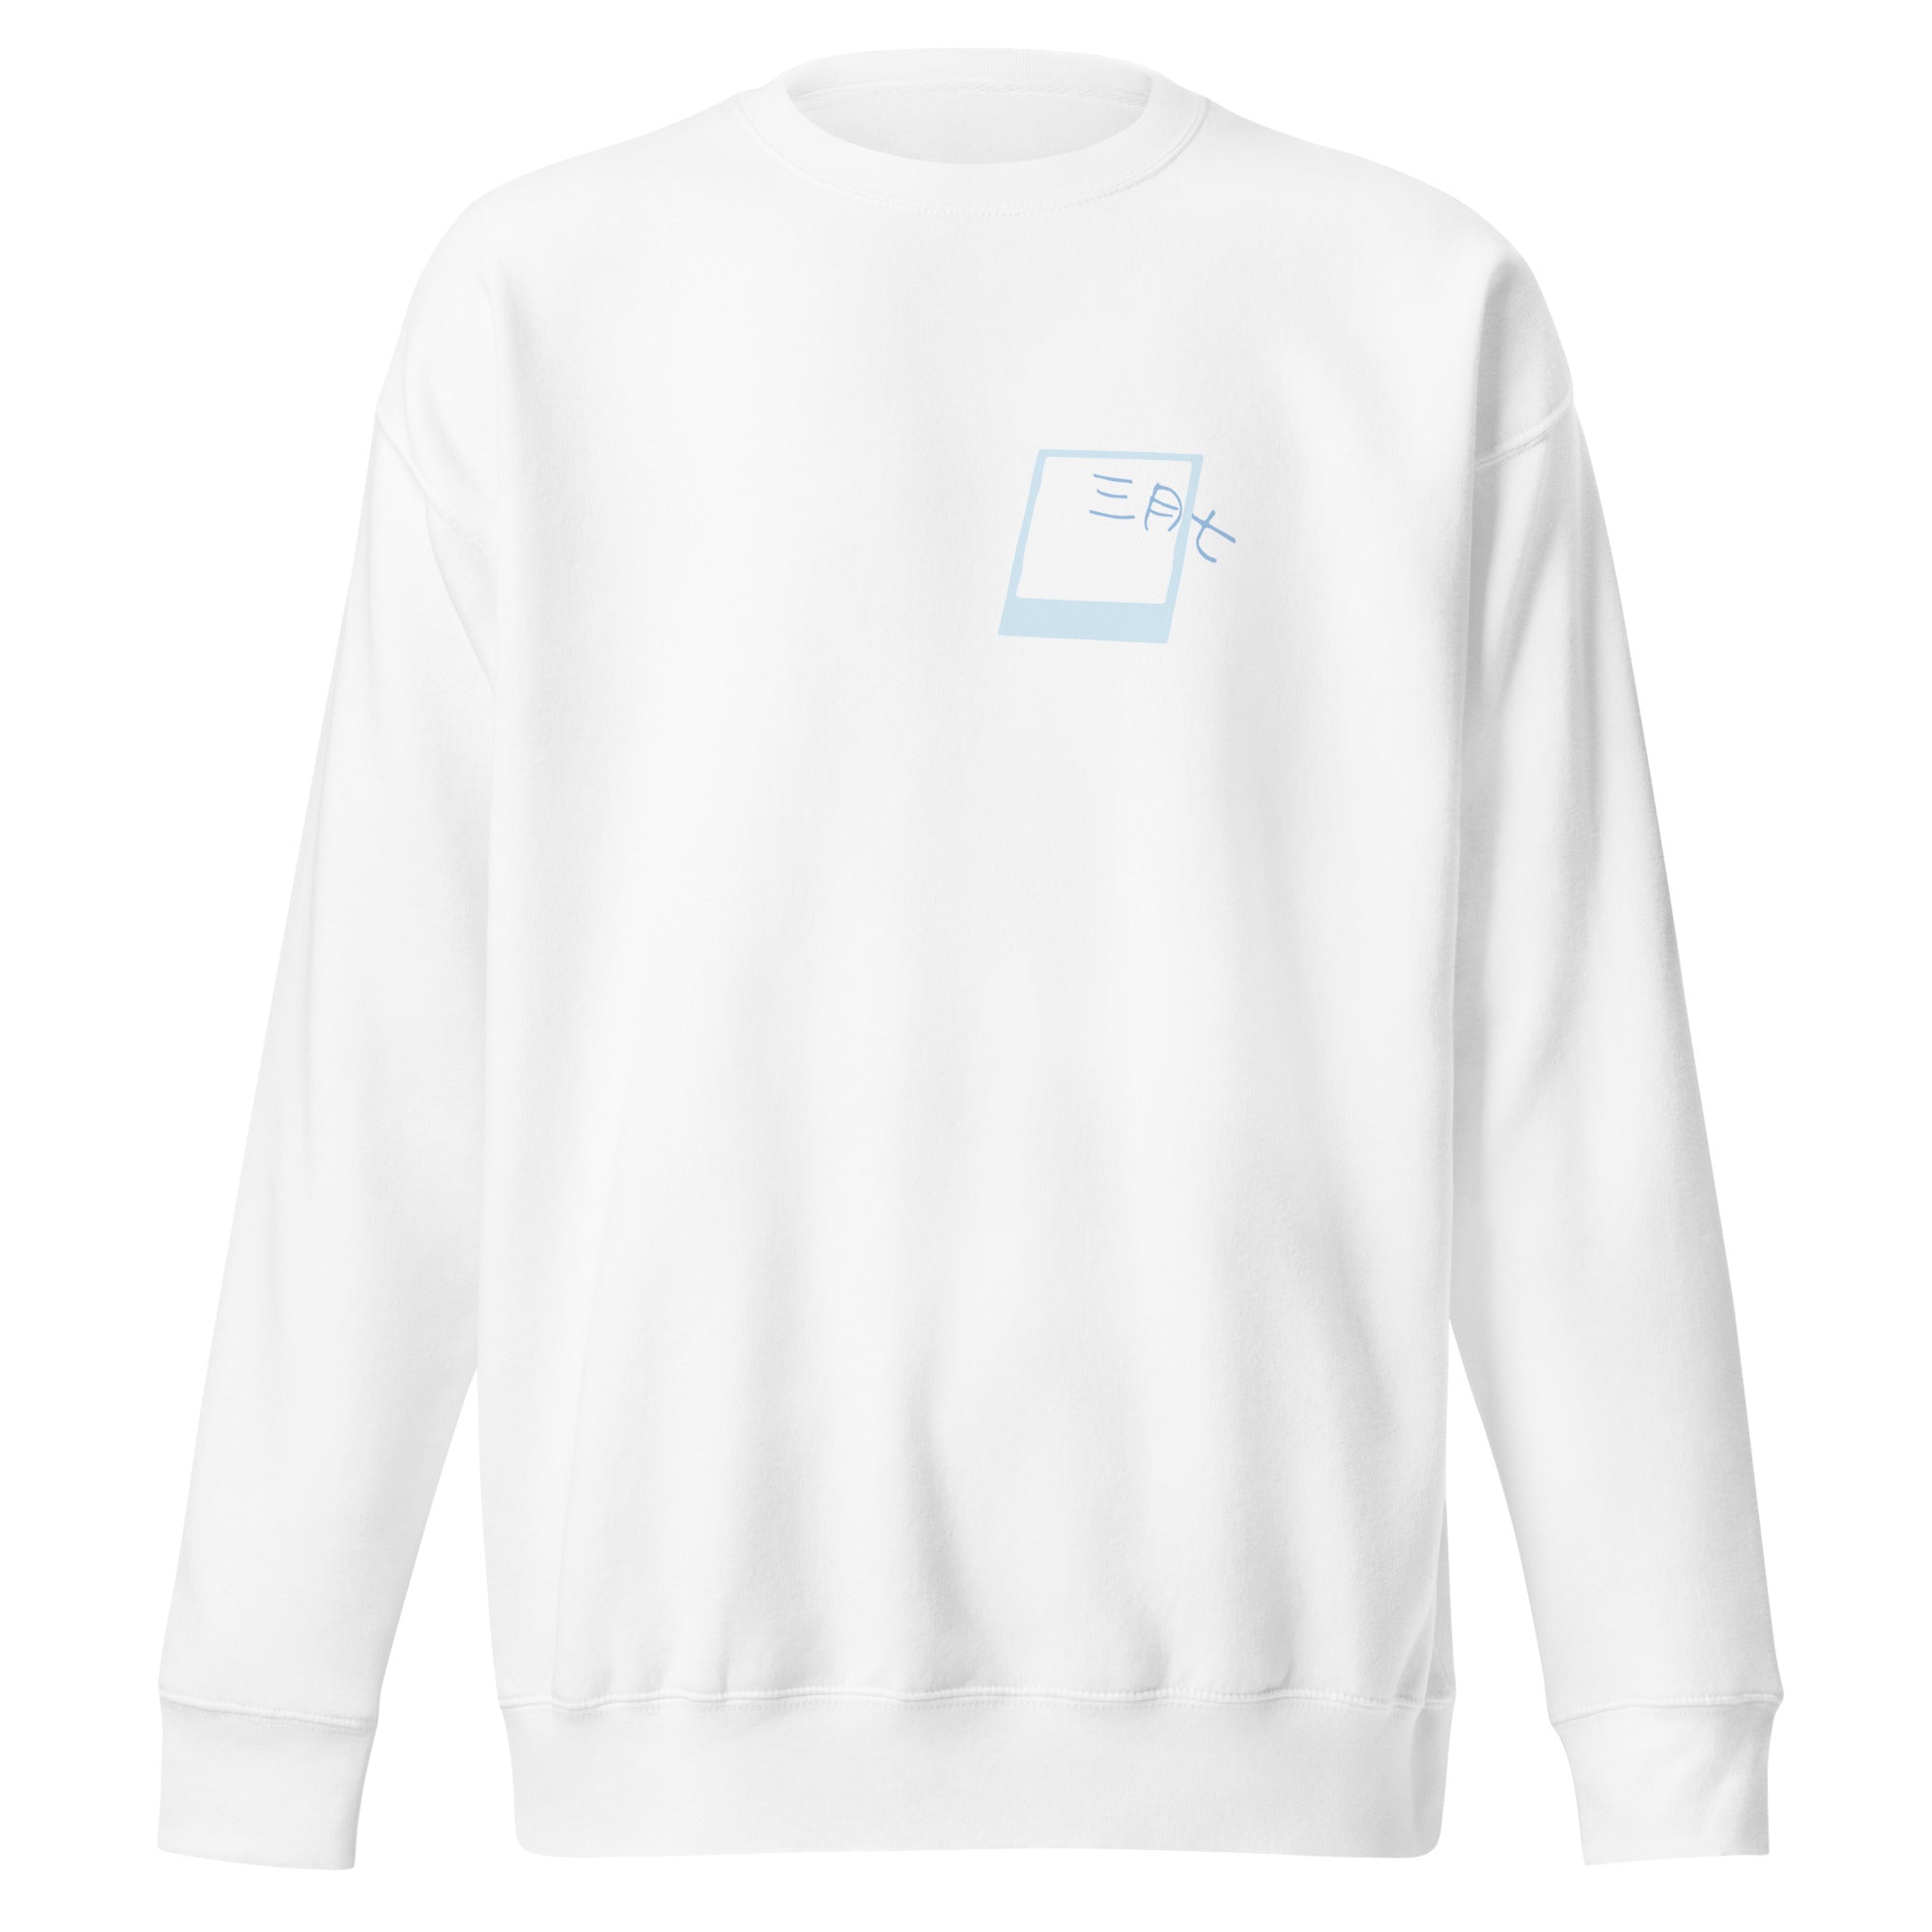 7TH • sweatshirt - Jackler - anime-inspired streetwear - anime clothing